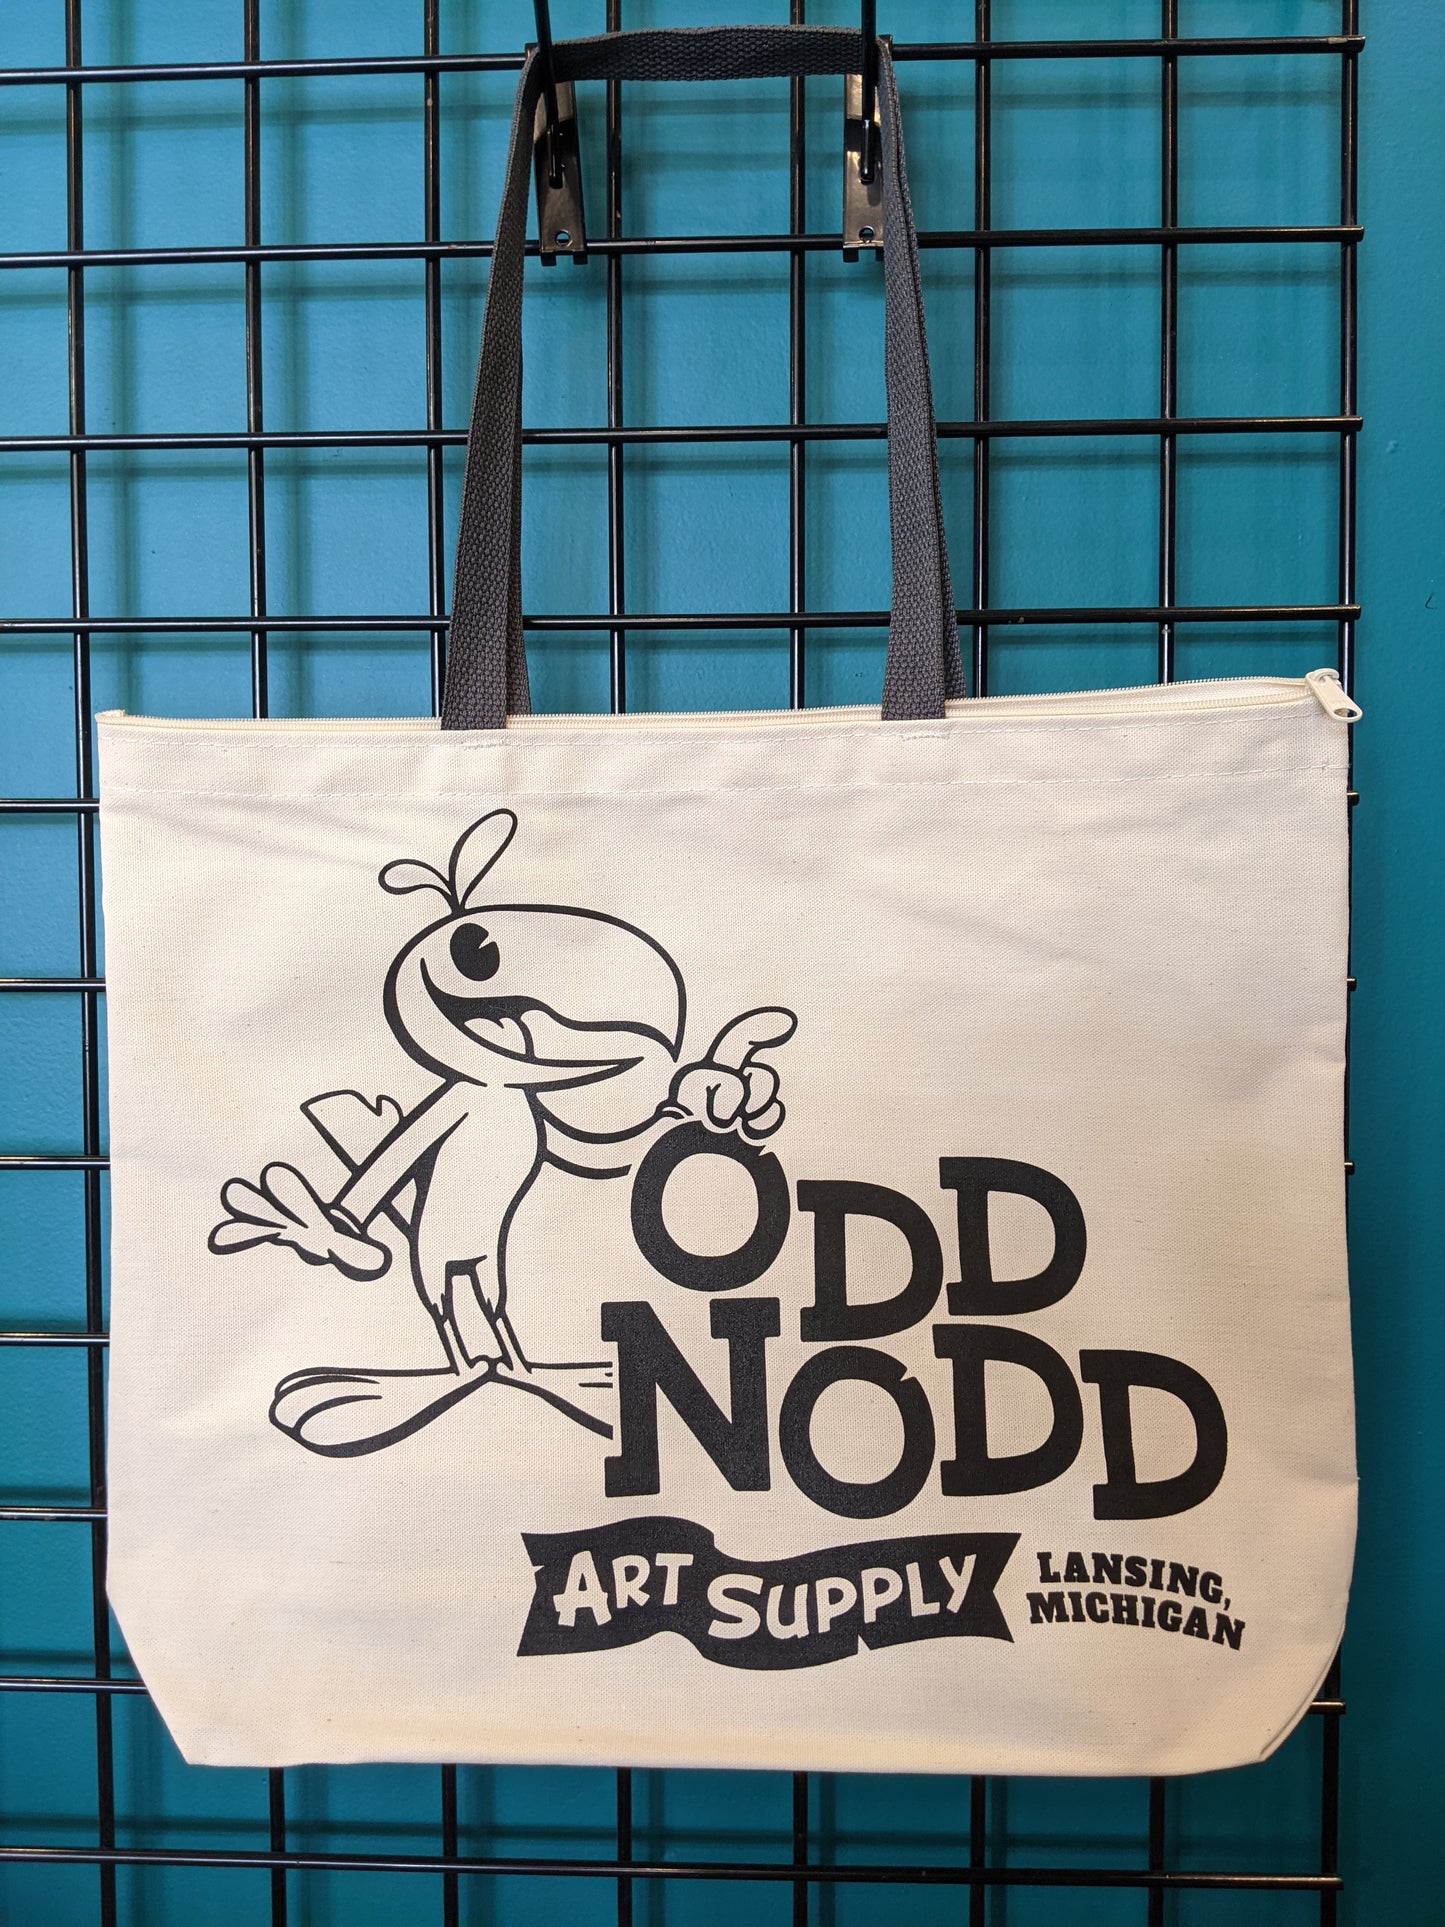 Odd Nodd Custom Tote Bags